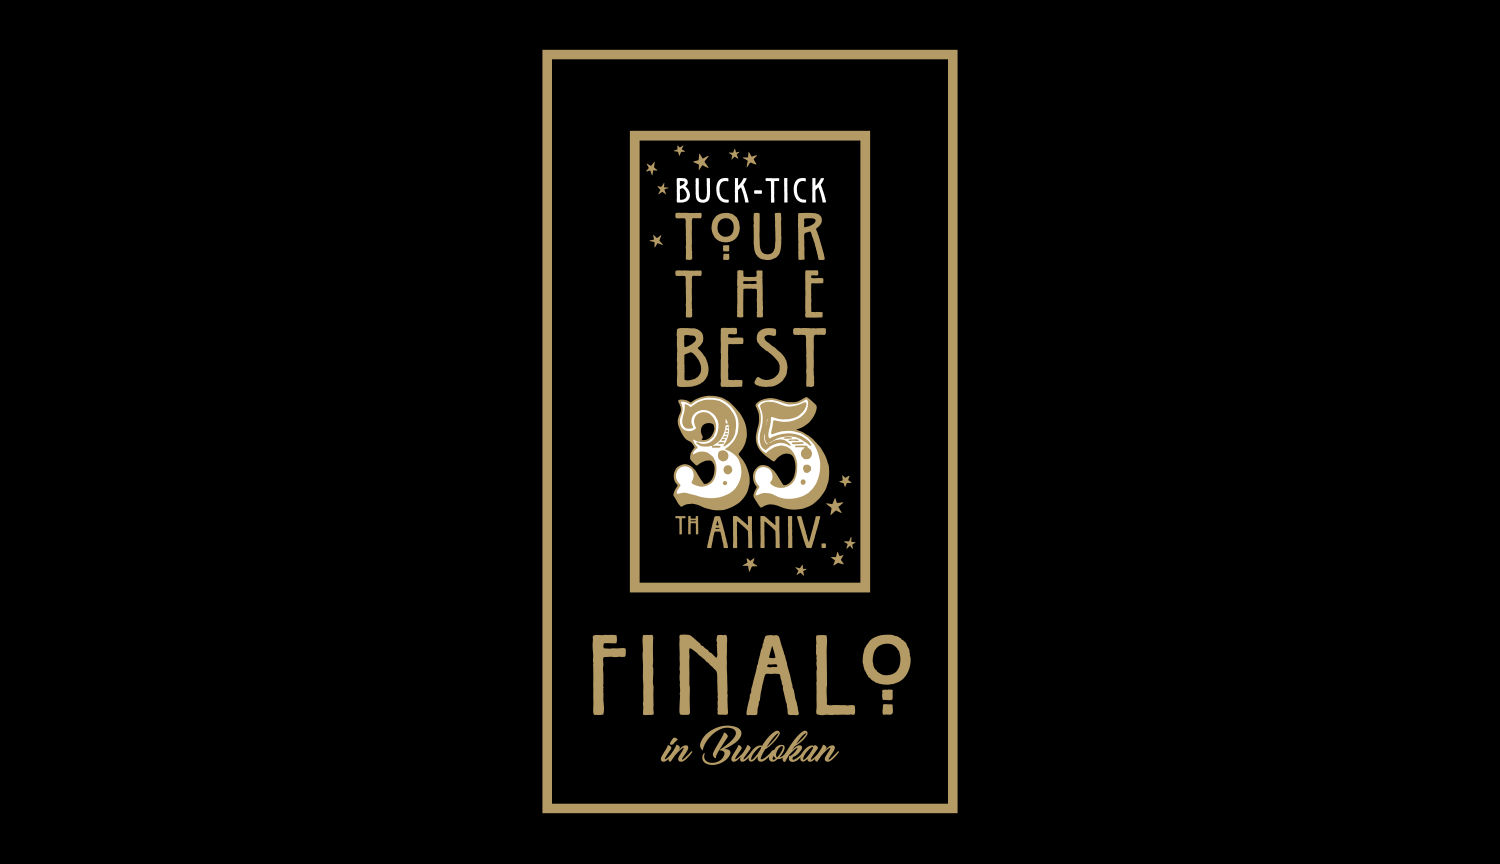 BUCK-TICK TOUR THE BEST 35th anniv. FINALO in Budokan